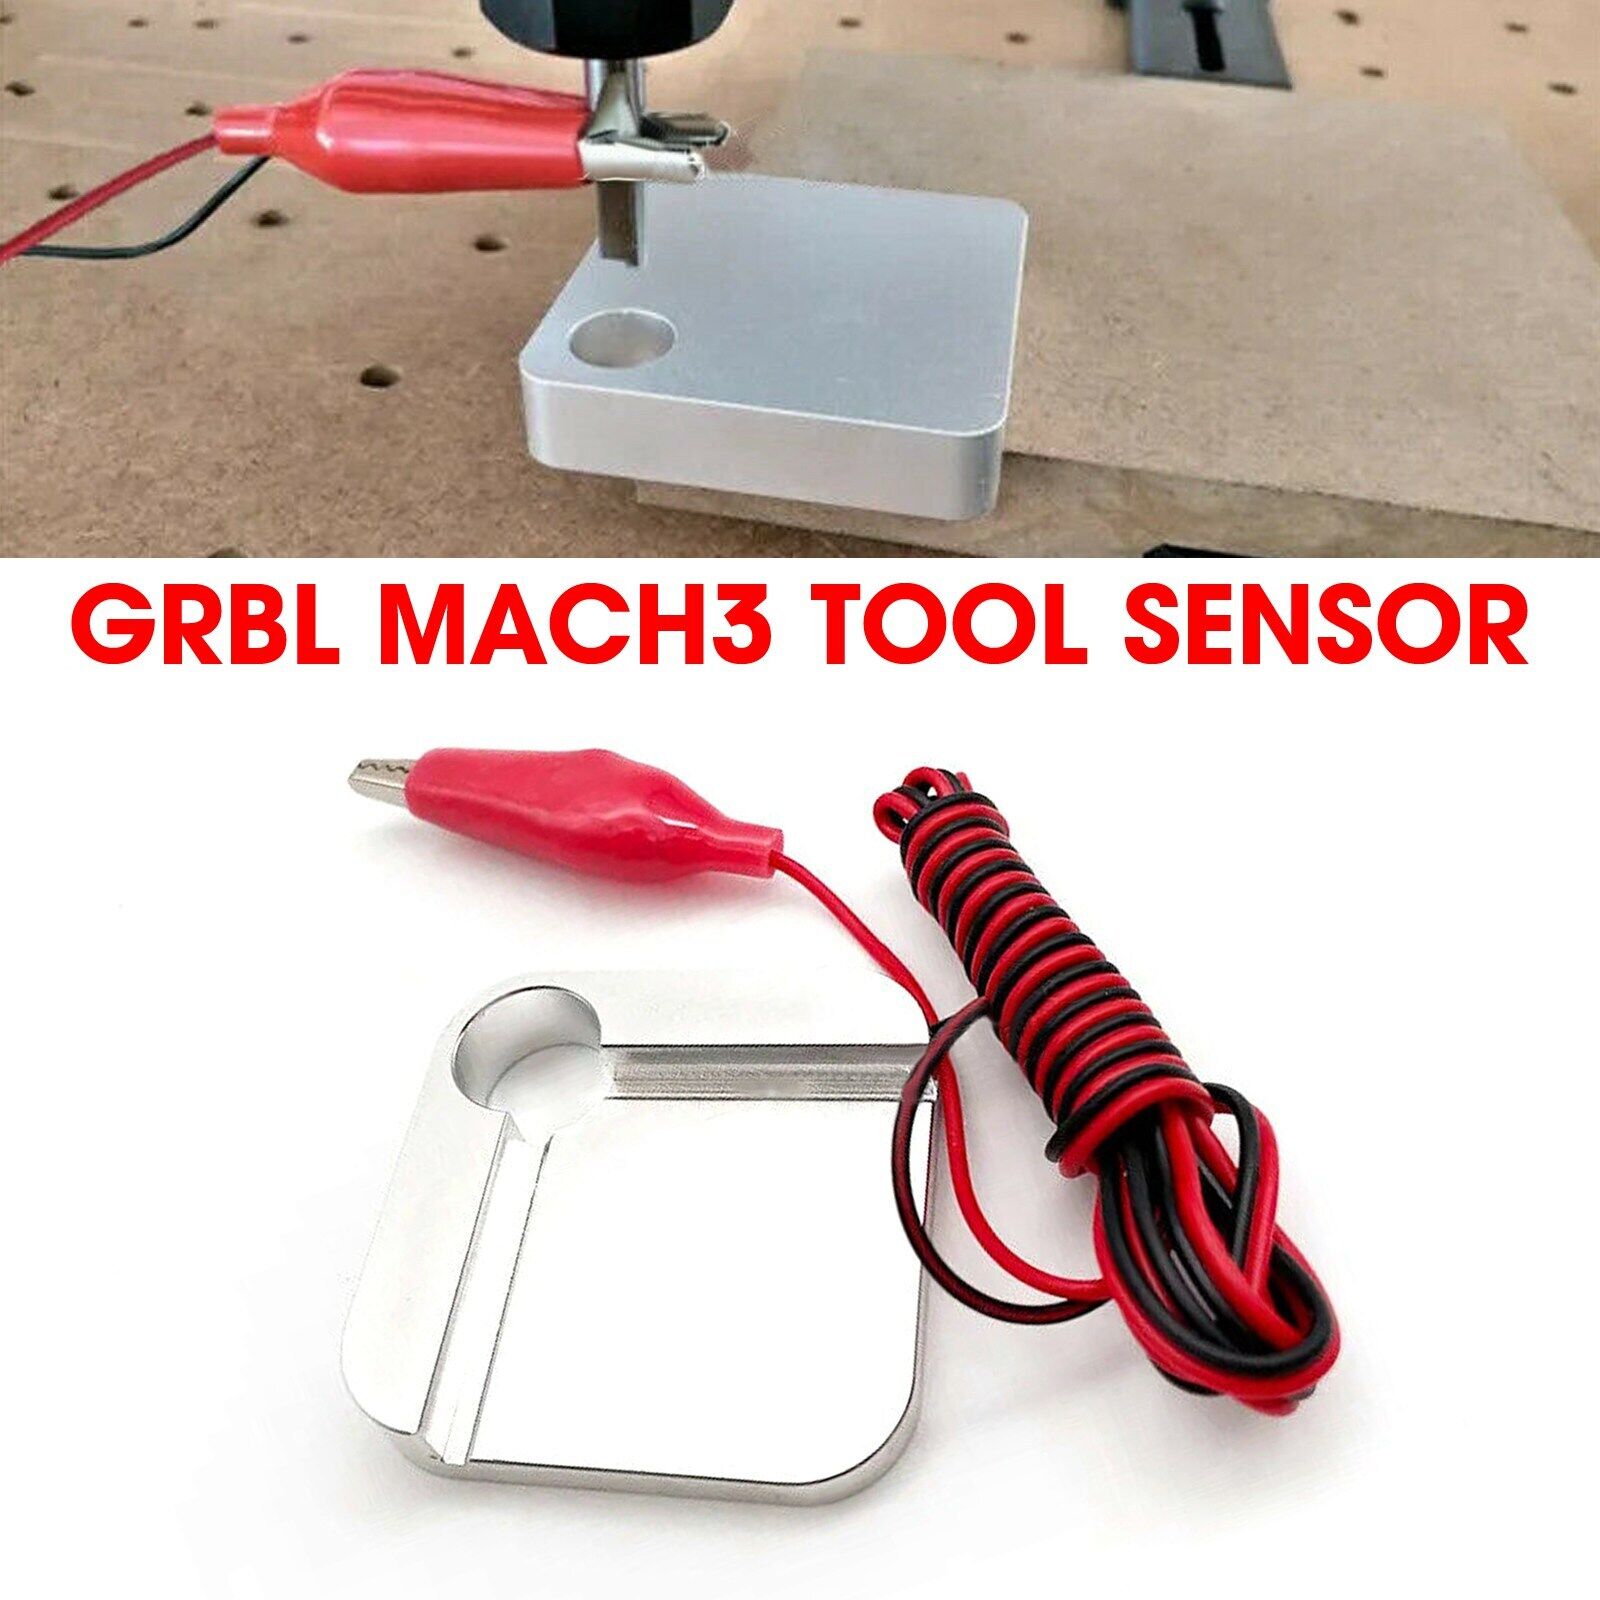 For CNC Machine Kit XYZ Touch Probe Precise Plug and Play GRBL Mach3 Tool Sensor